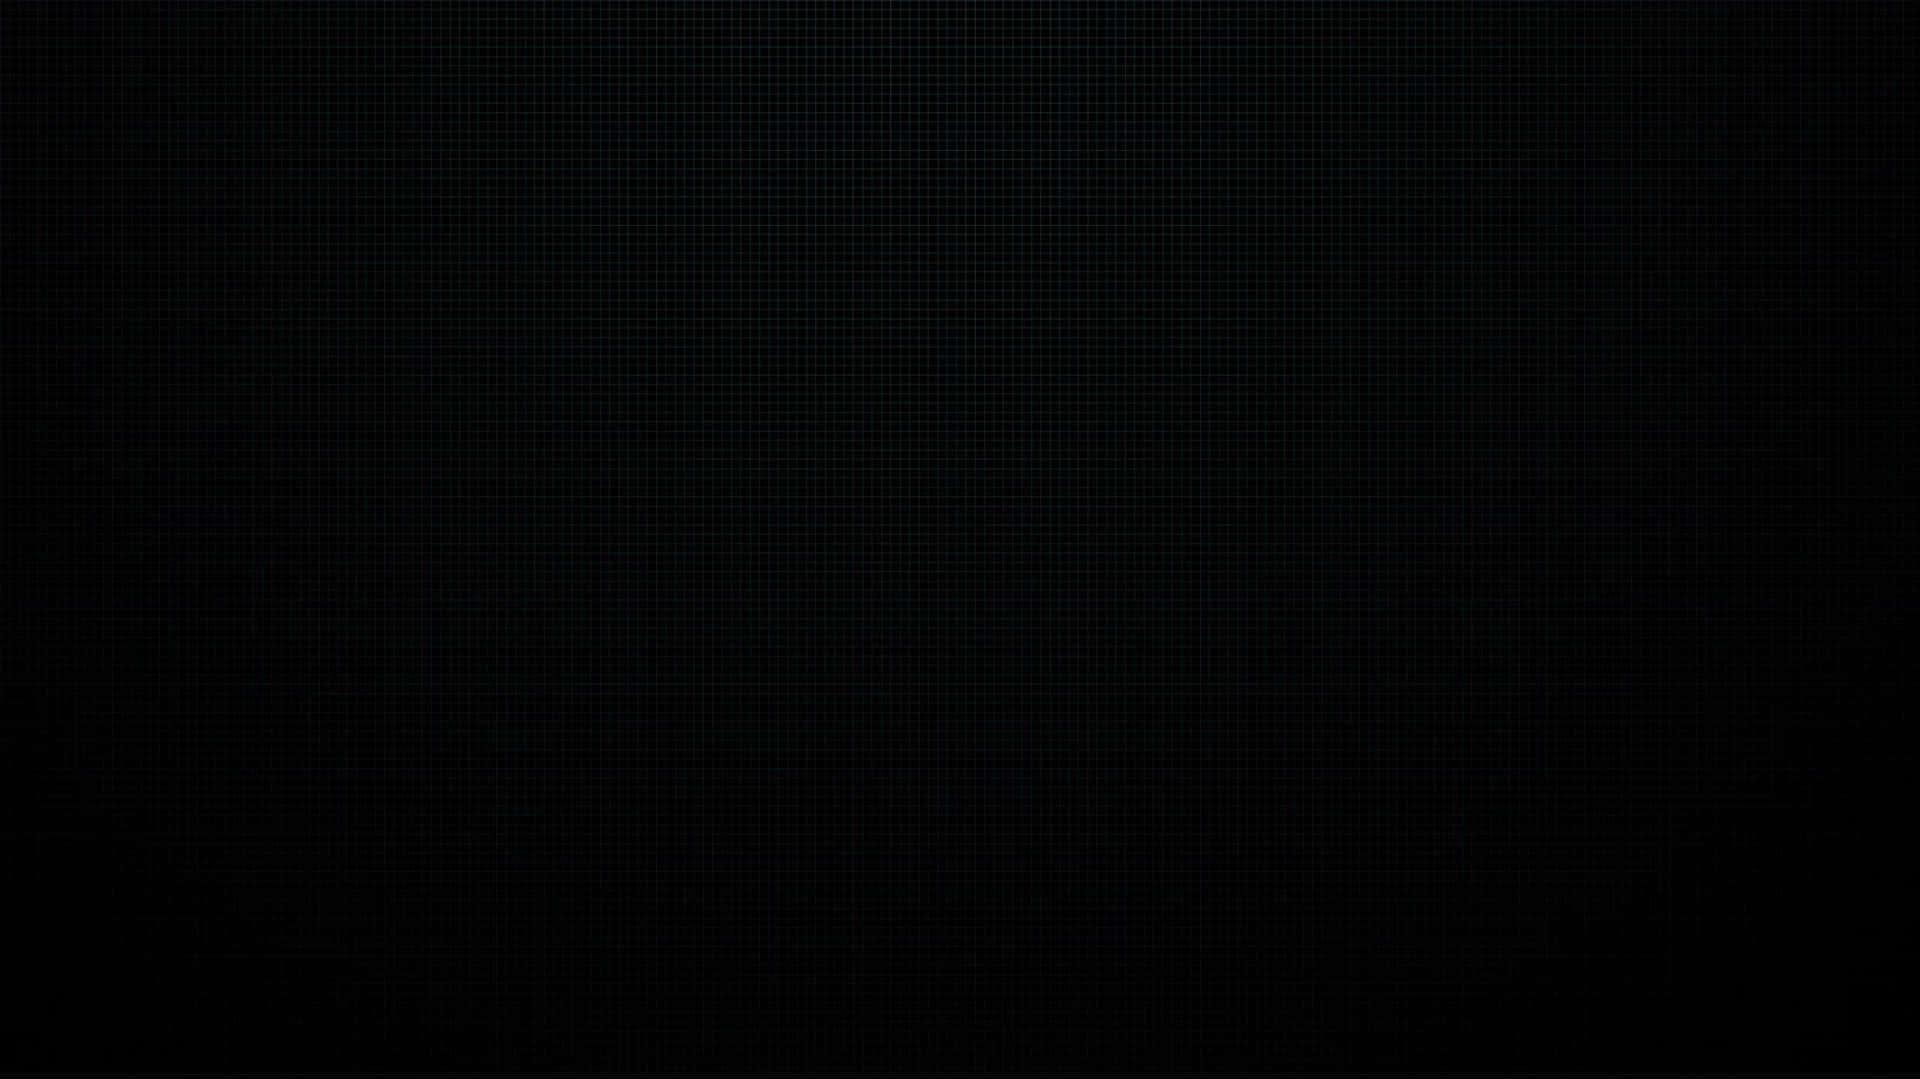 A Plain Black Desktop Background Wallpaper